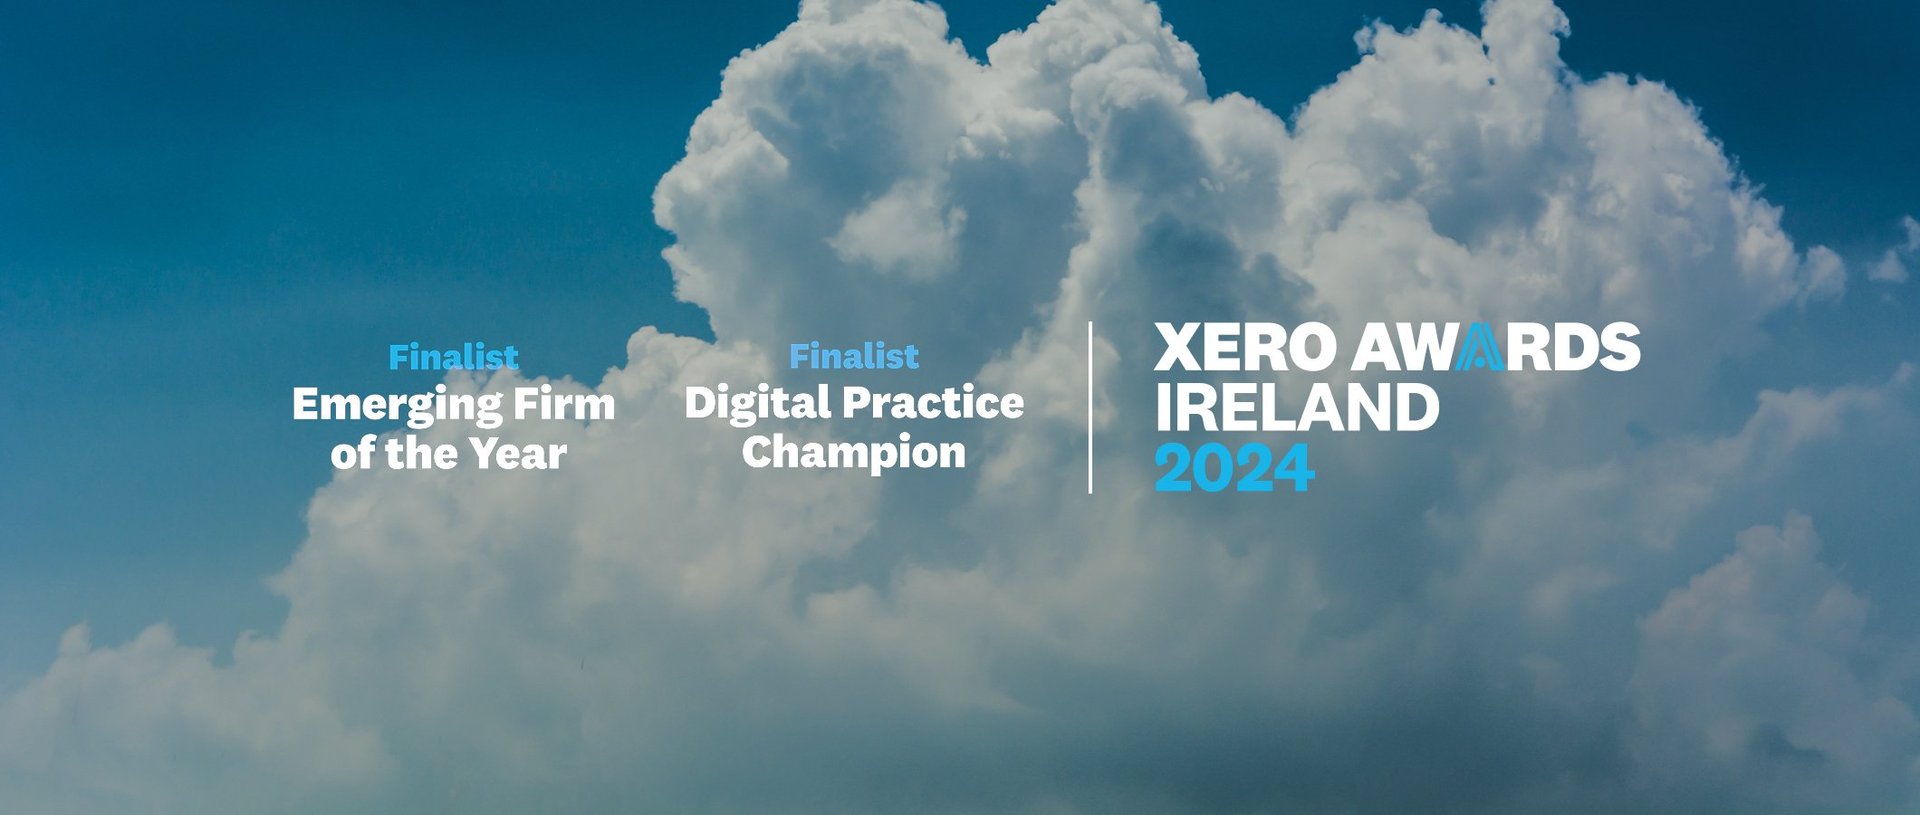 Xero Awards Ireland 2024 (2120x900)